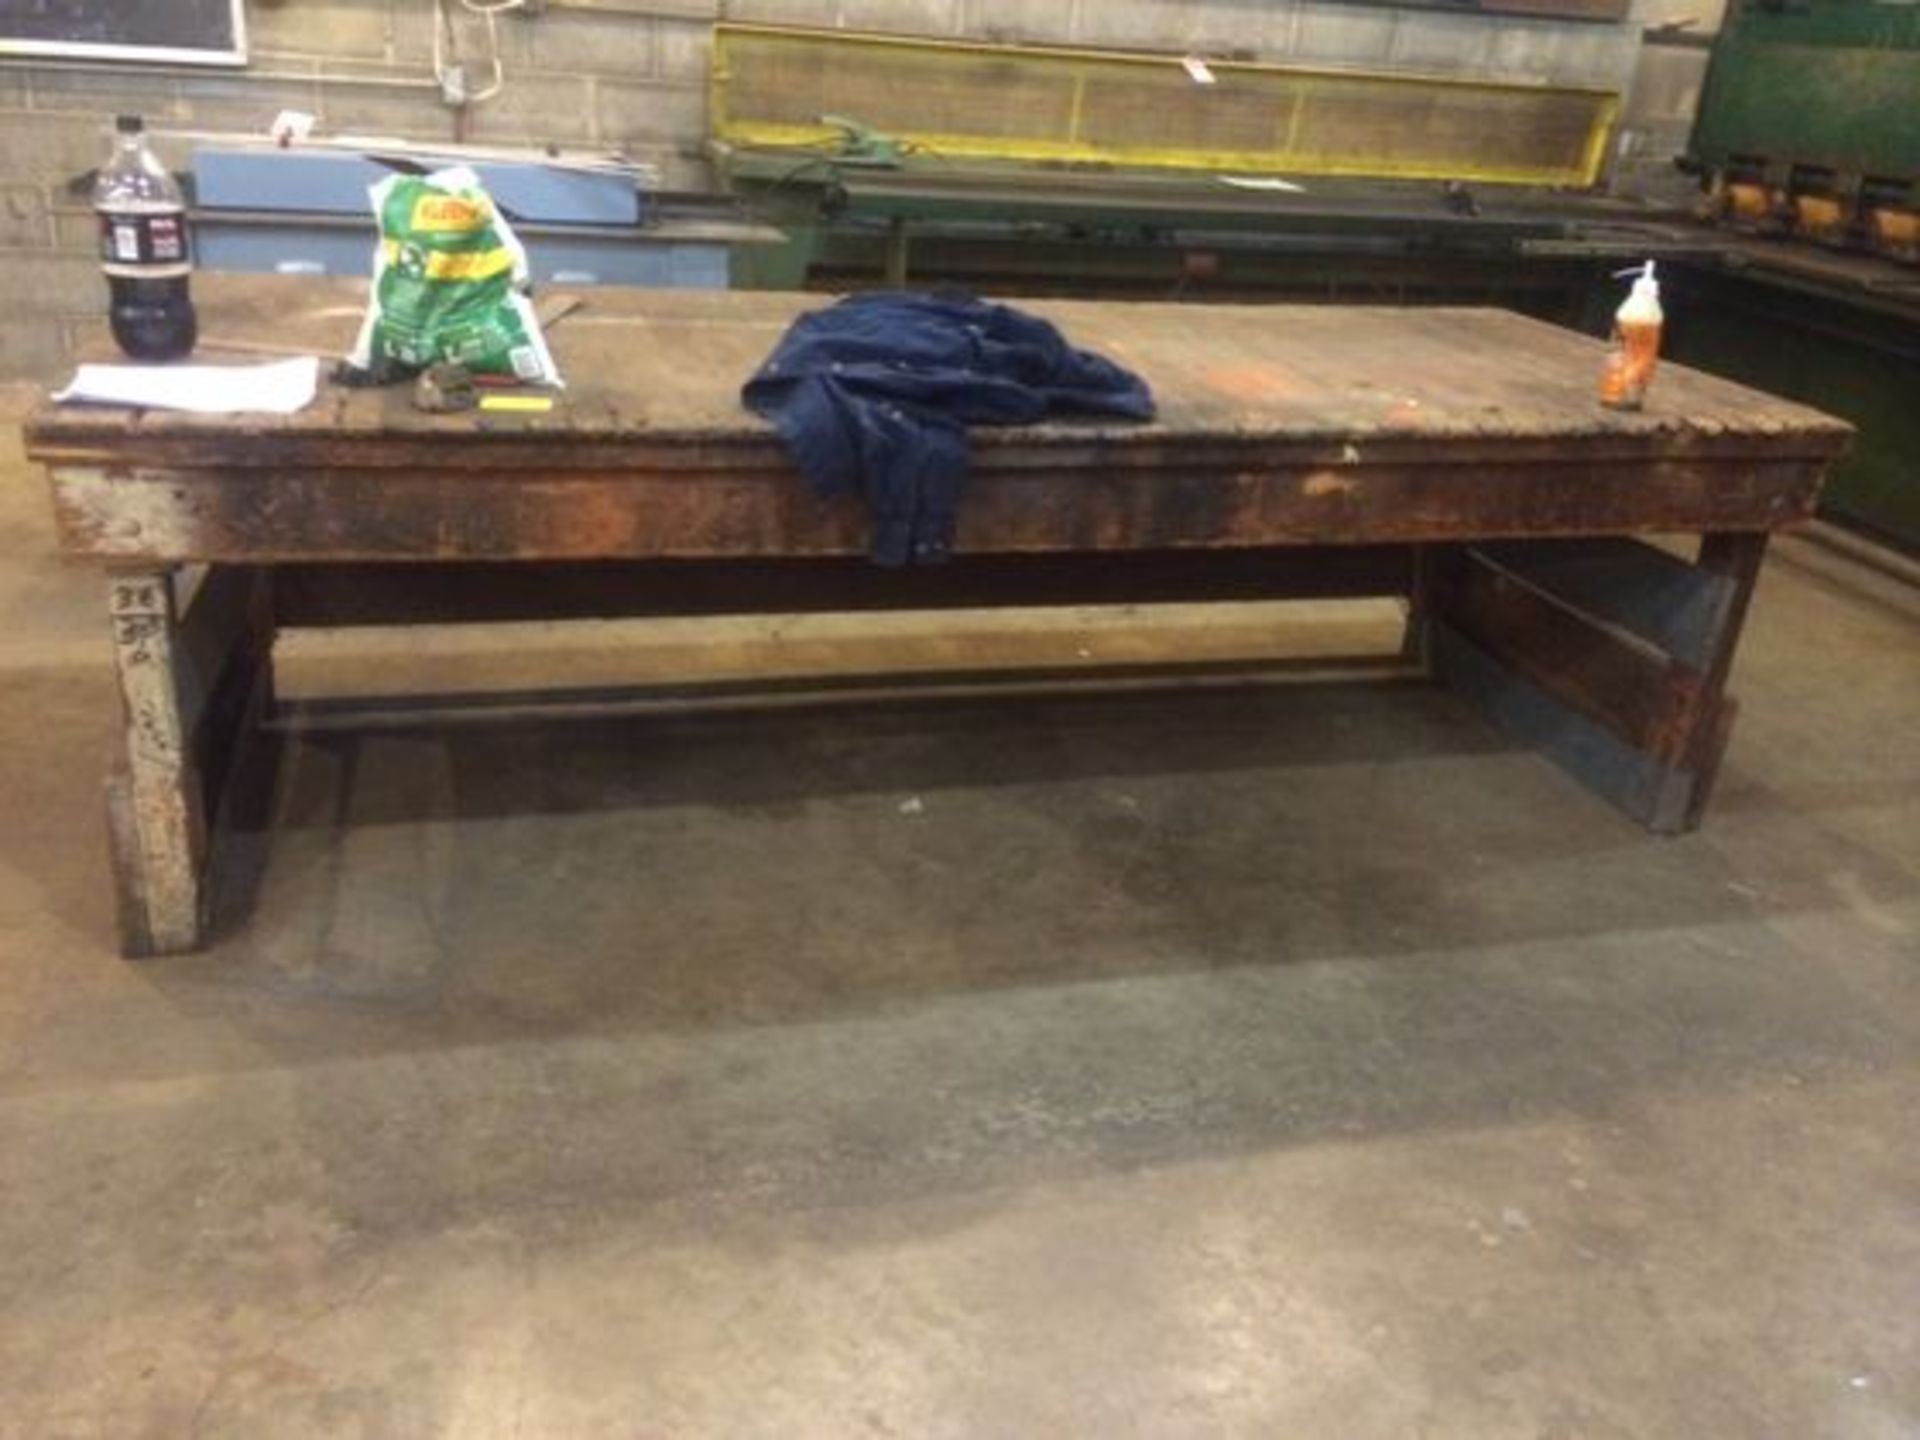 Wood work bench